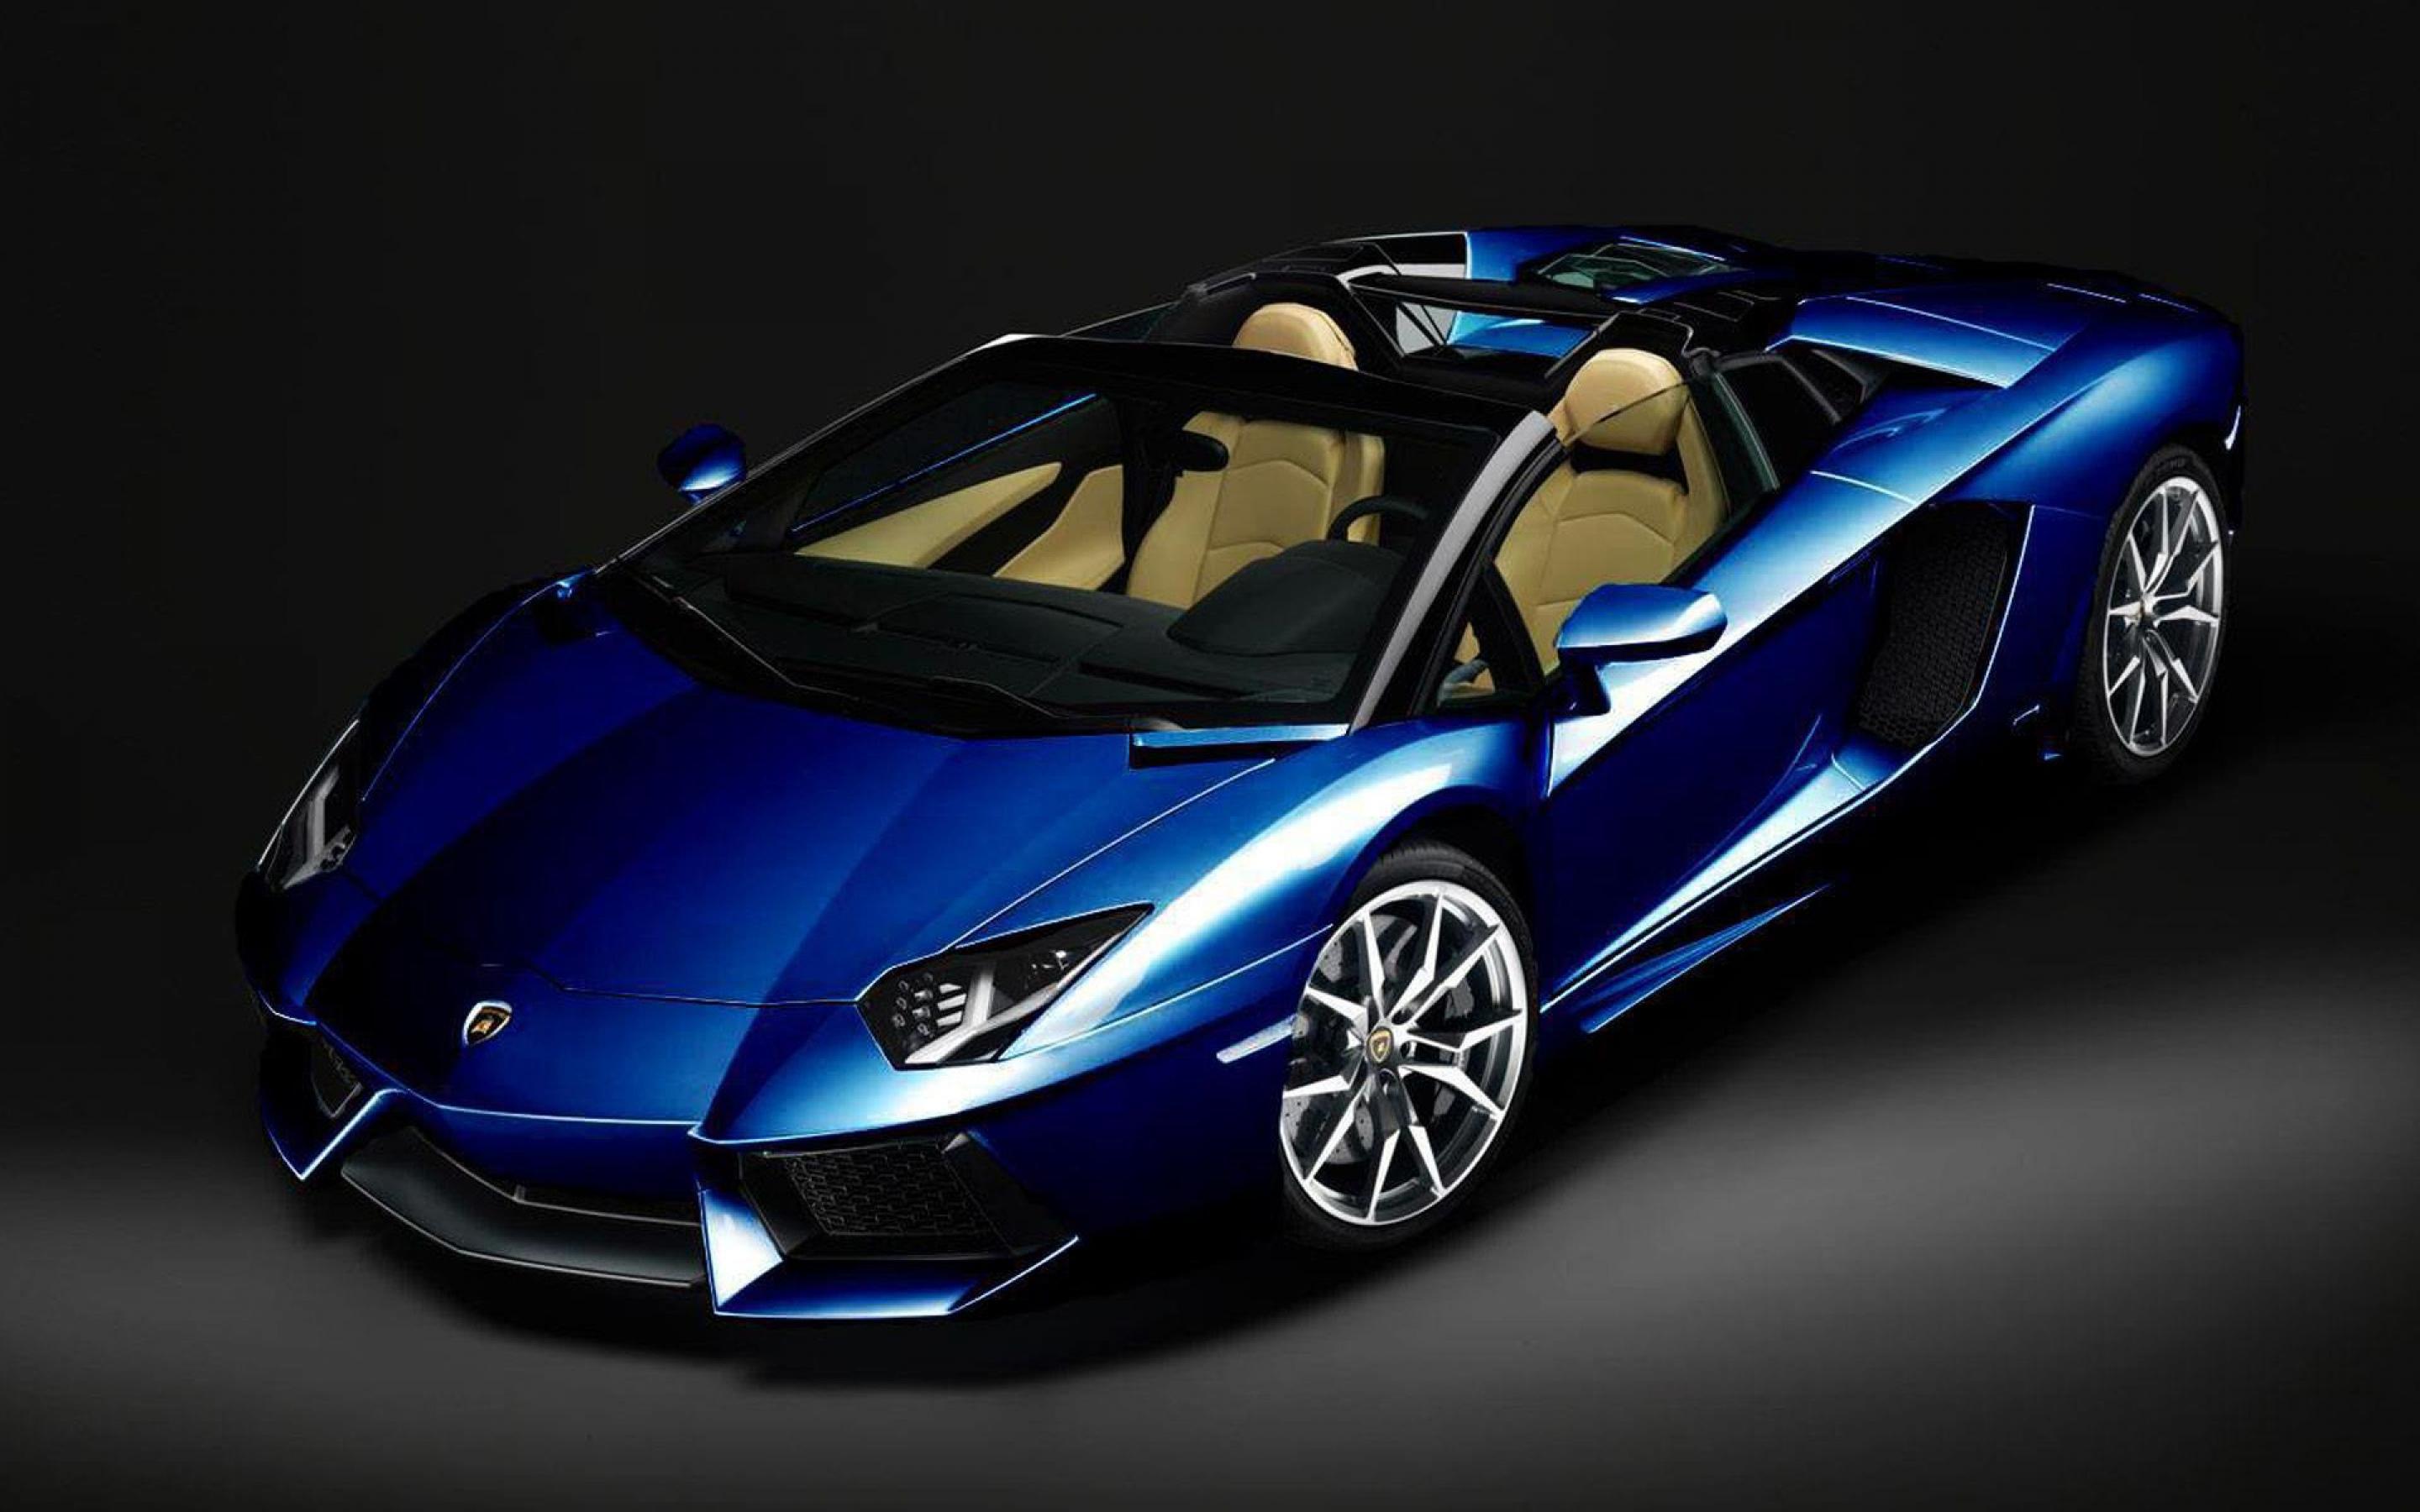 Blue Lamborghini Wallpaper Full HD. Vehicles Wallpaper